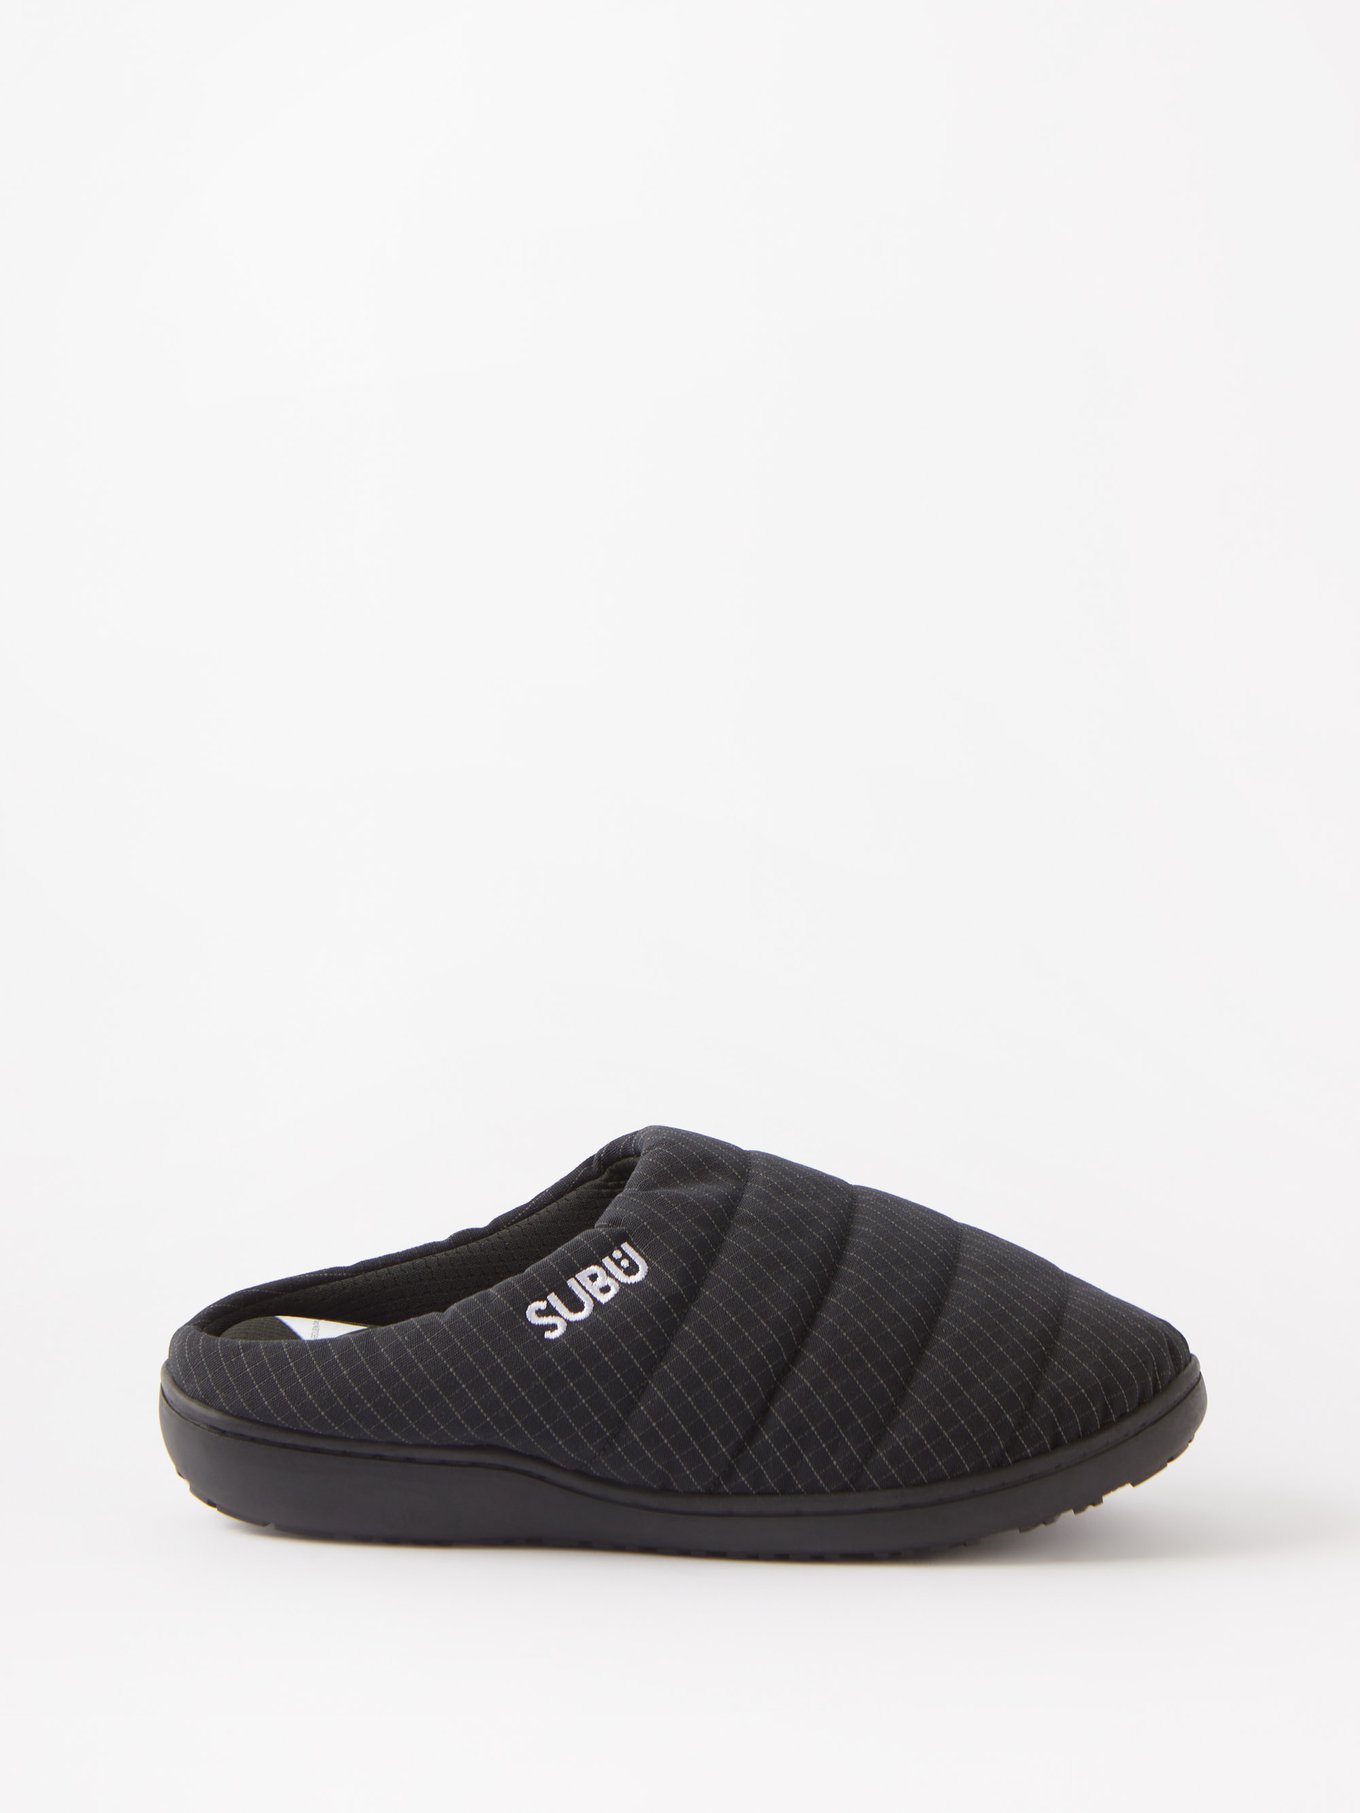 X SUBU reflective Ecopak™ slippers | And Wander